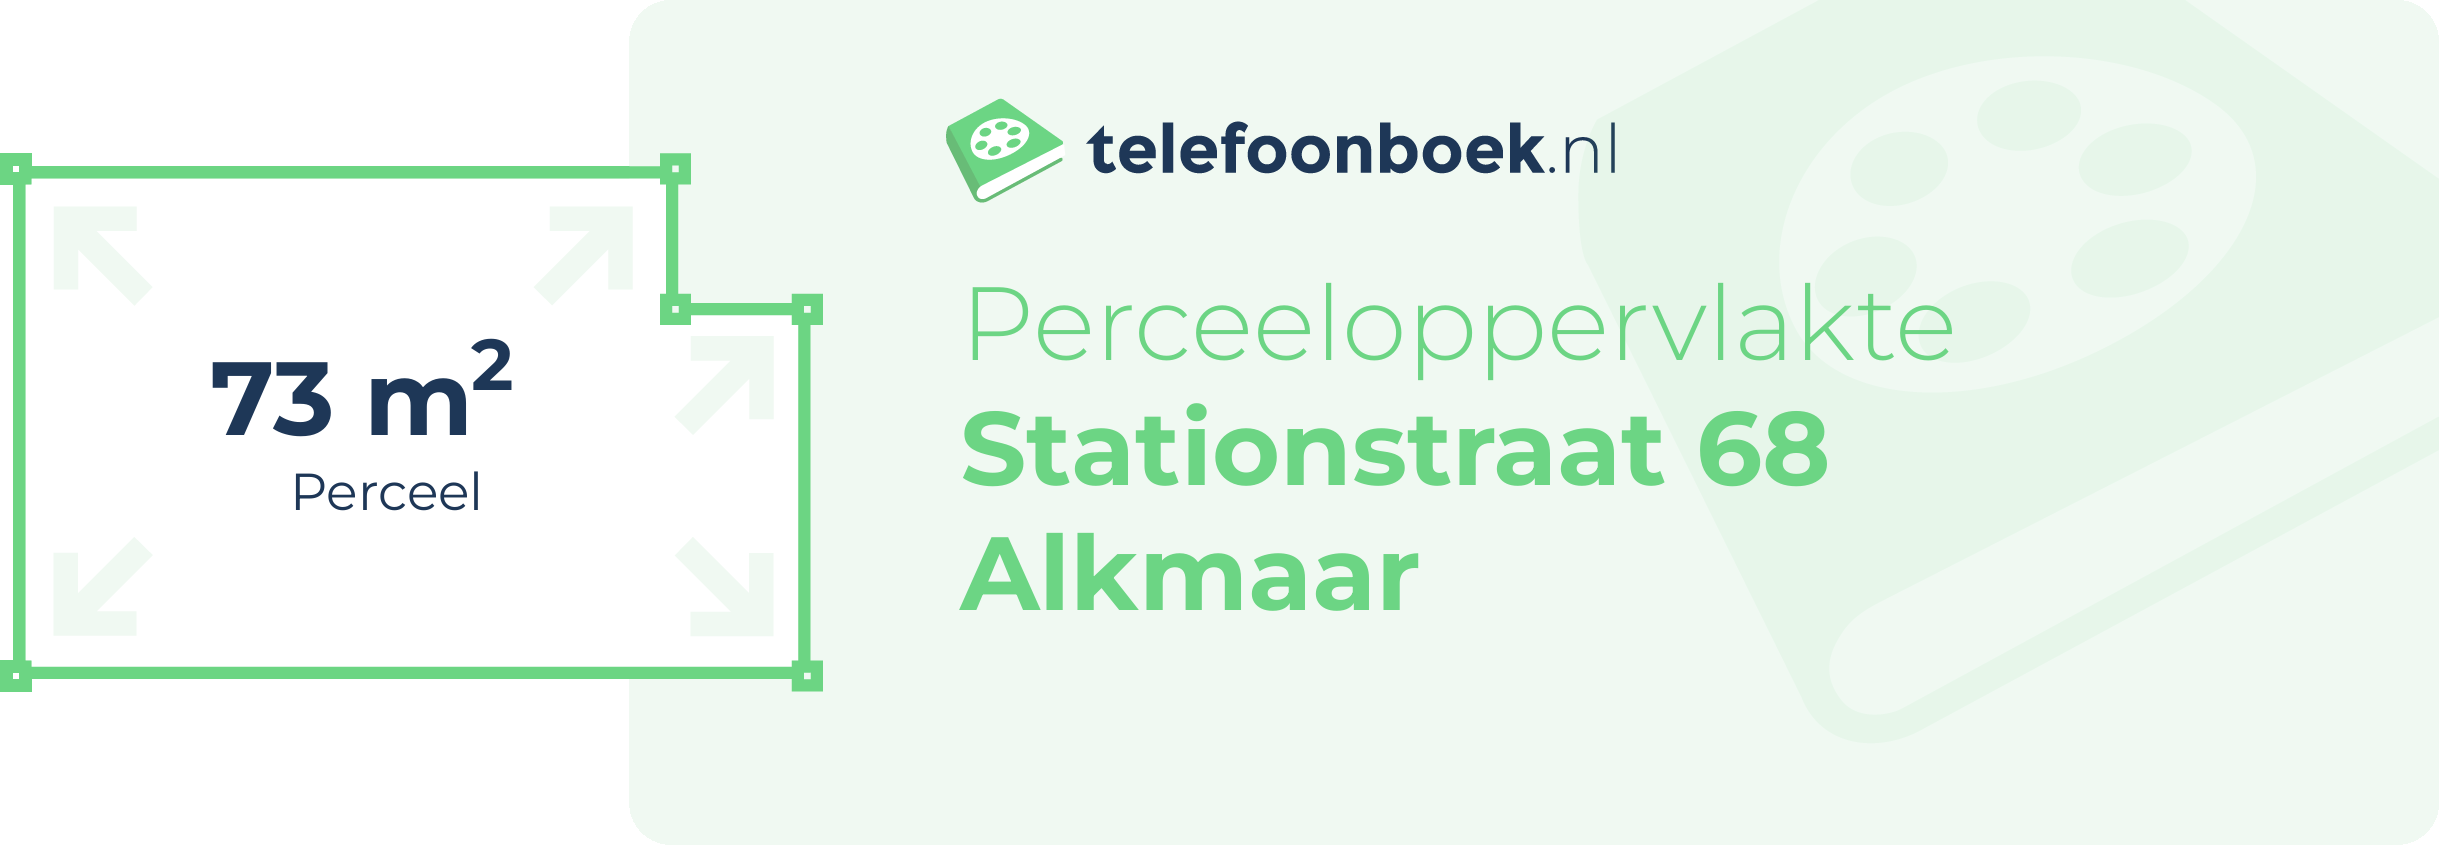 Perceeloppervlakte Stationstraat 68 Alkmaar